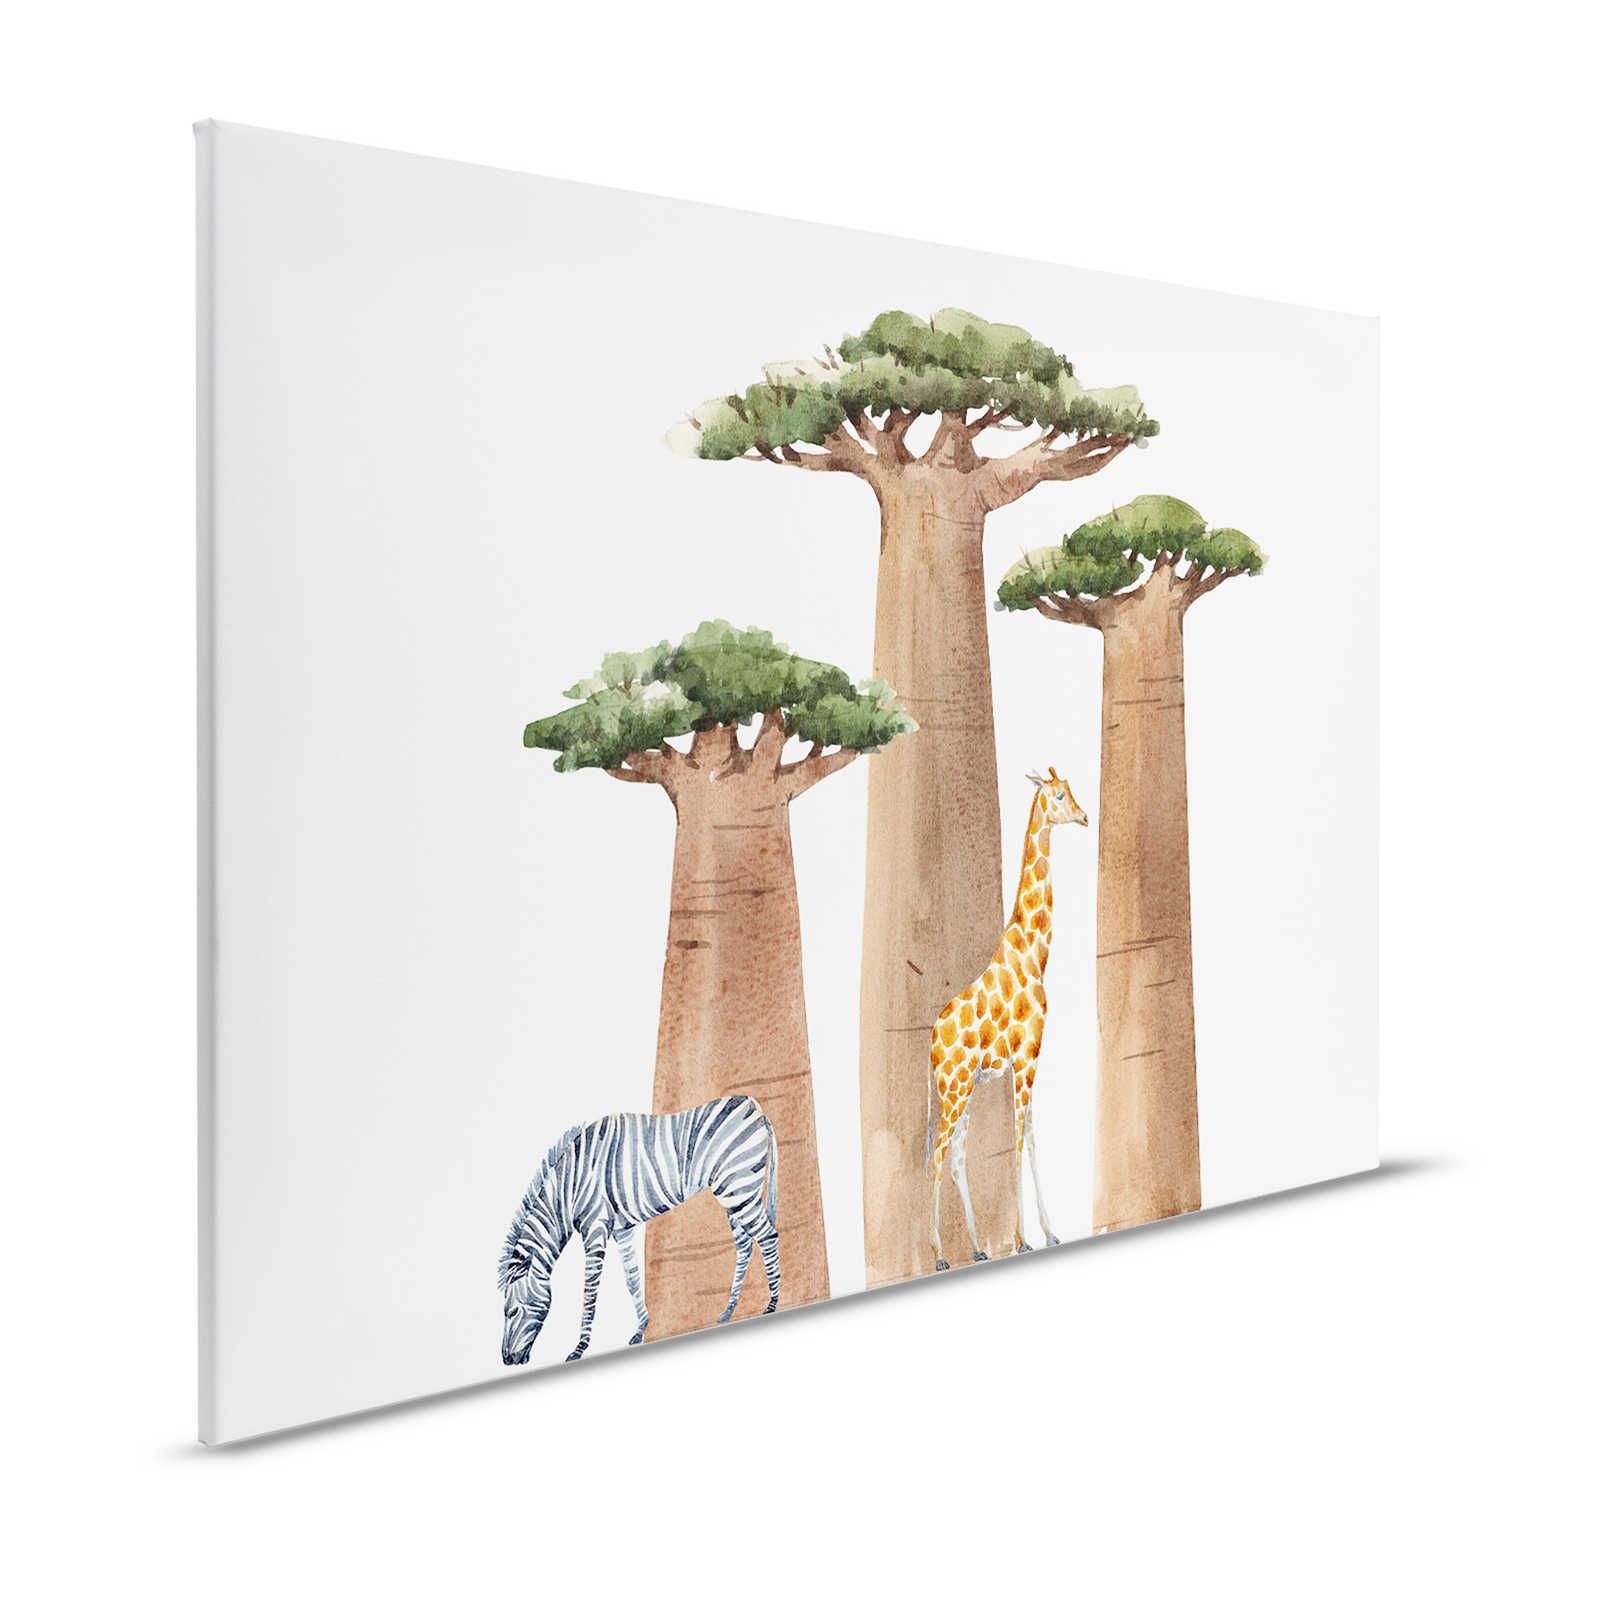 Canvas Savannah with Giraffe and Zebra - 120 cm x 80 cm
